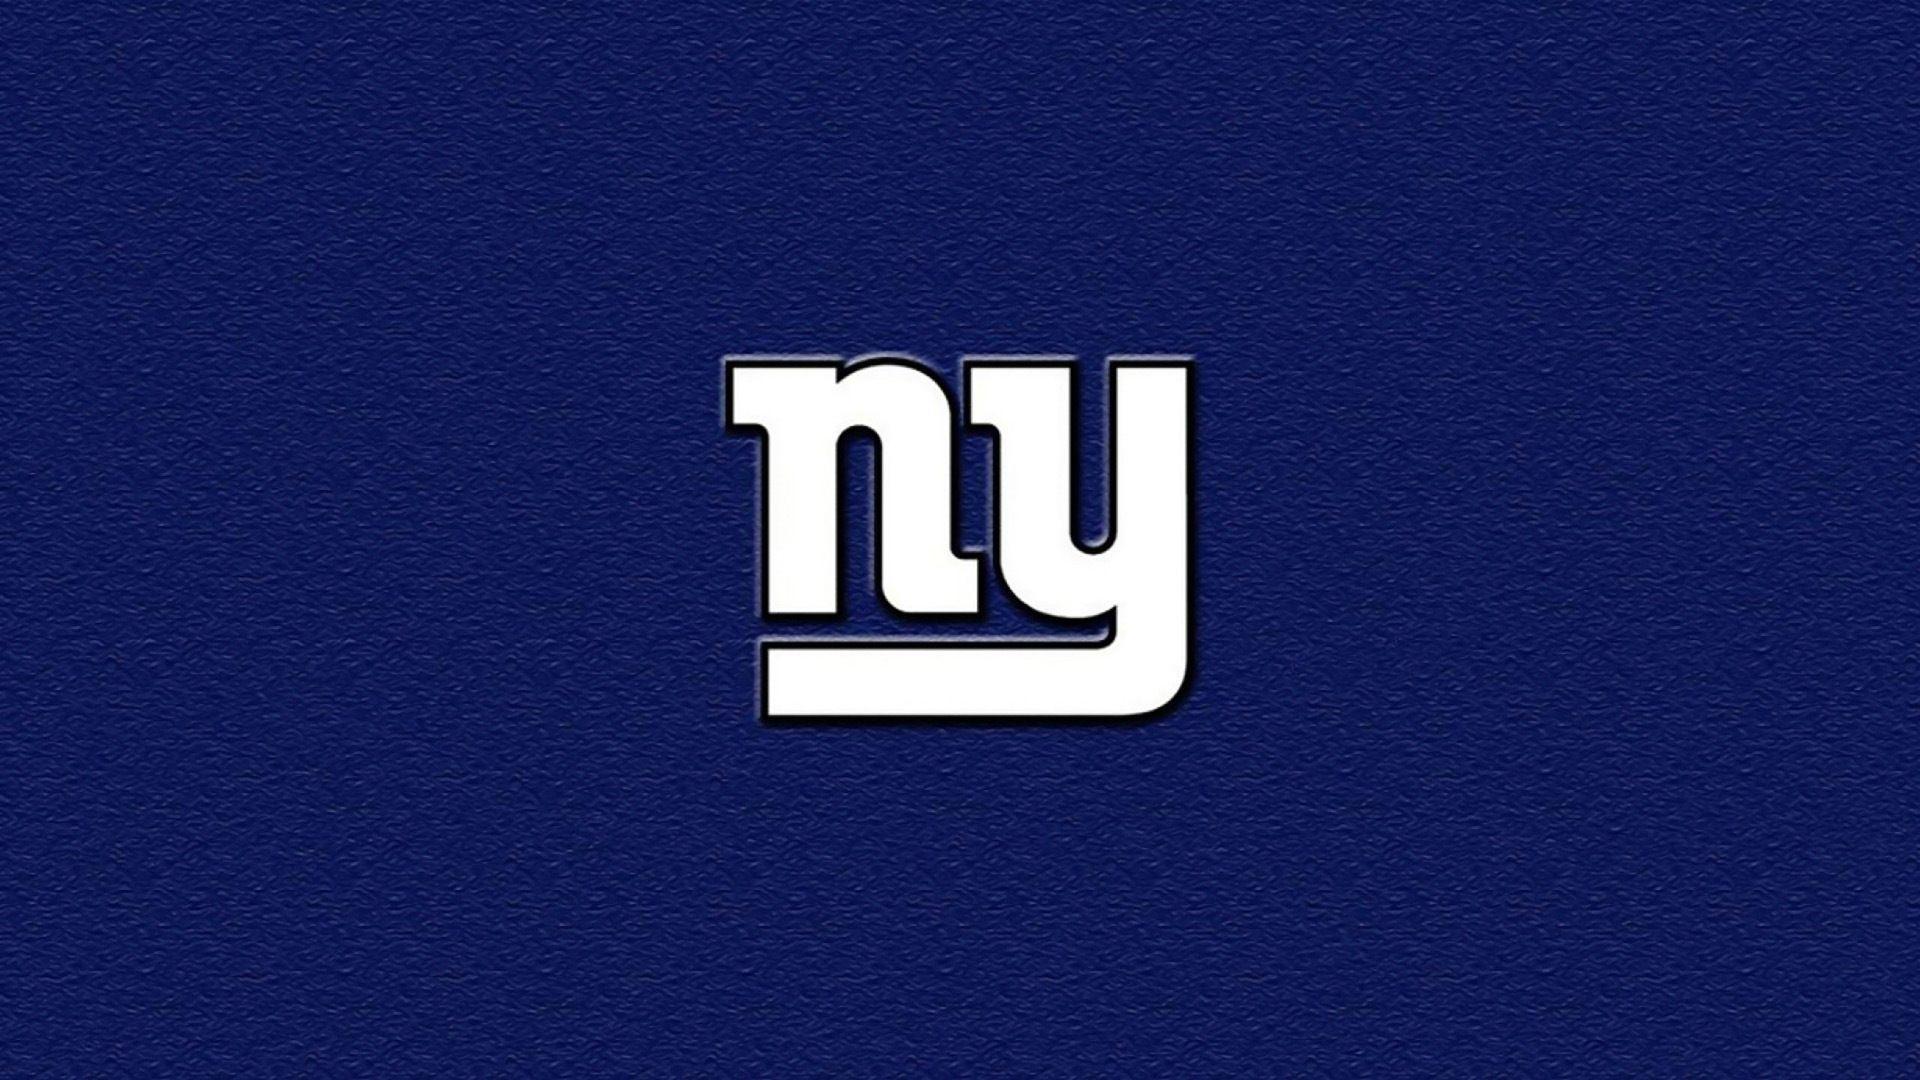 New York Giants Logo Wallpaper 68624 1920x1080px